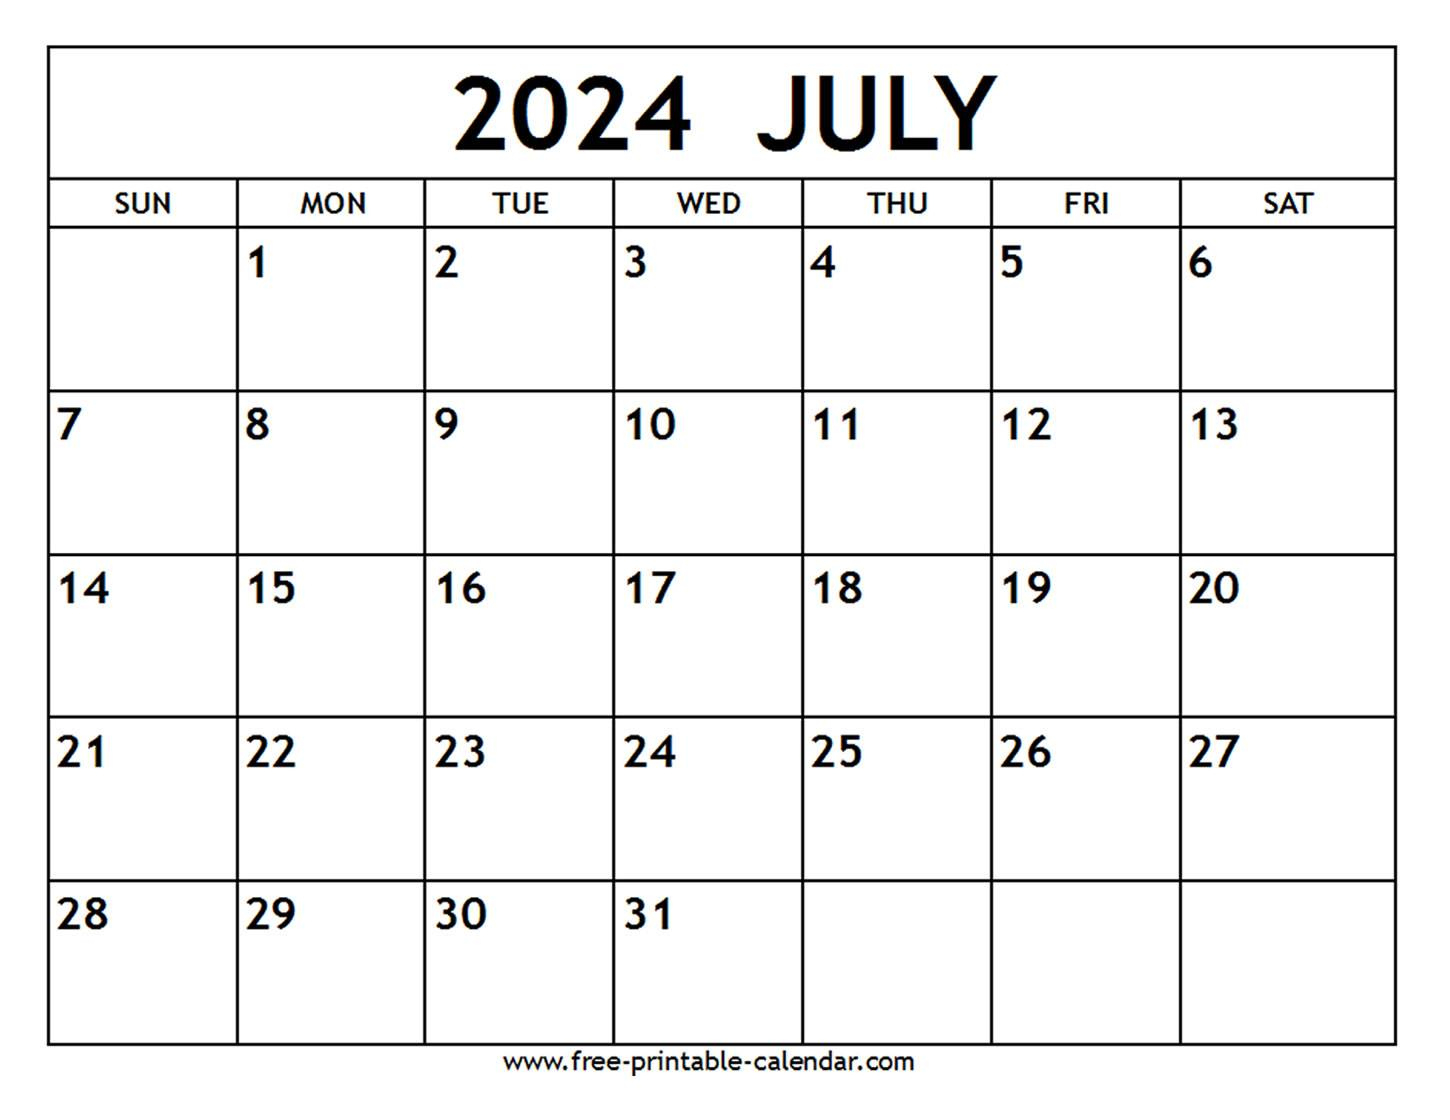 July 2024 Calendar - Free-Printable-Calendar | Calendar 2024